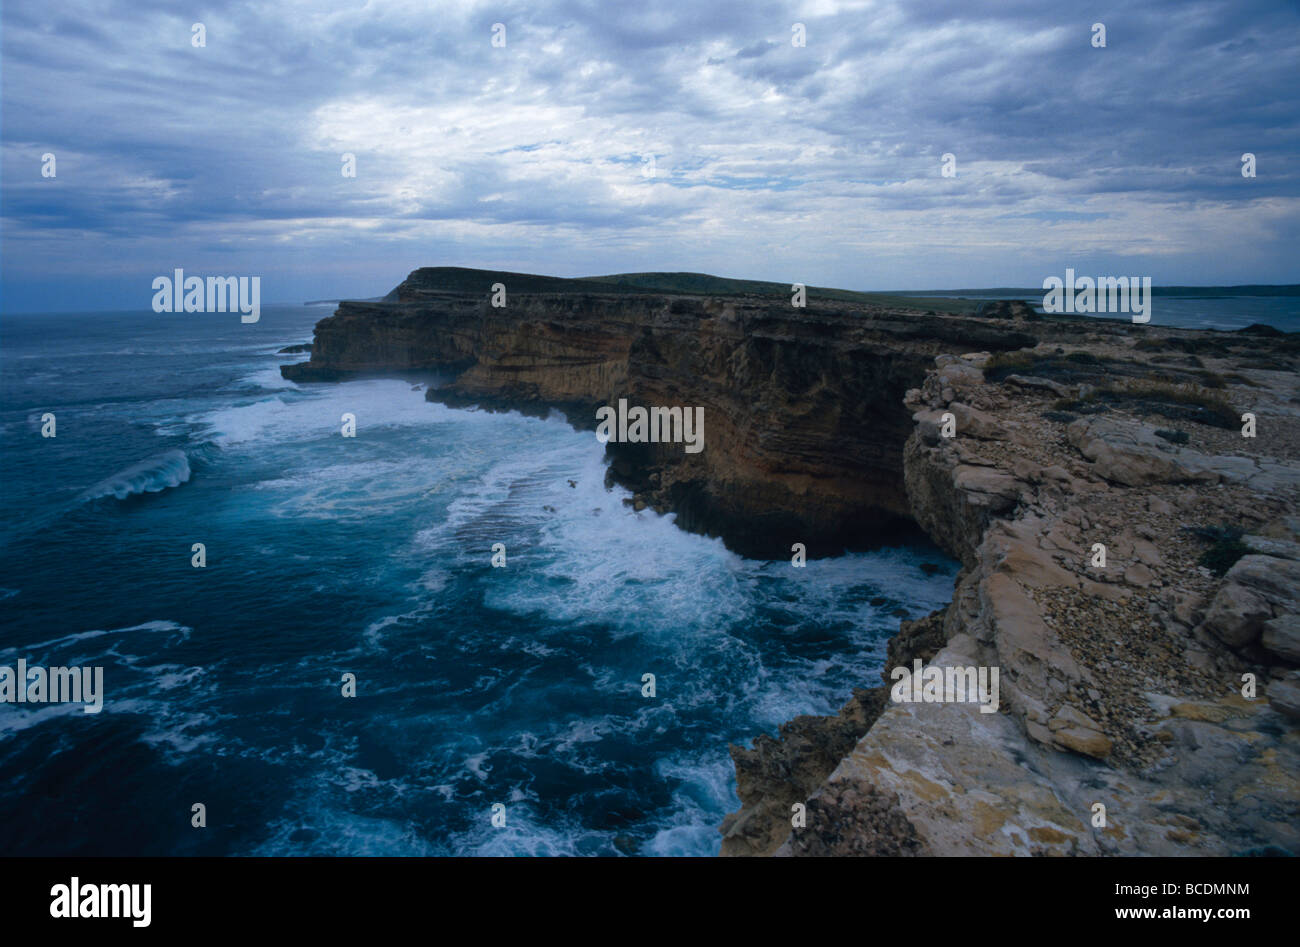 A limestone peninsula juts into a storm ravaged Southern Ocean. Stock Photo